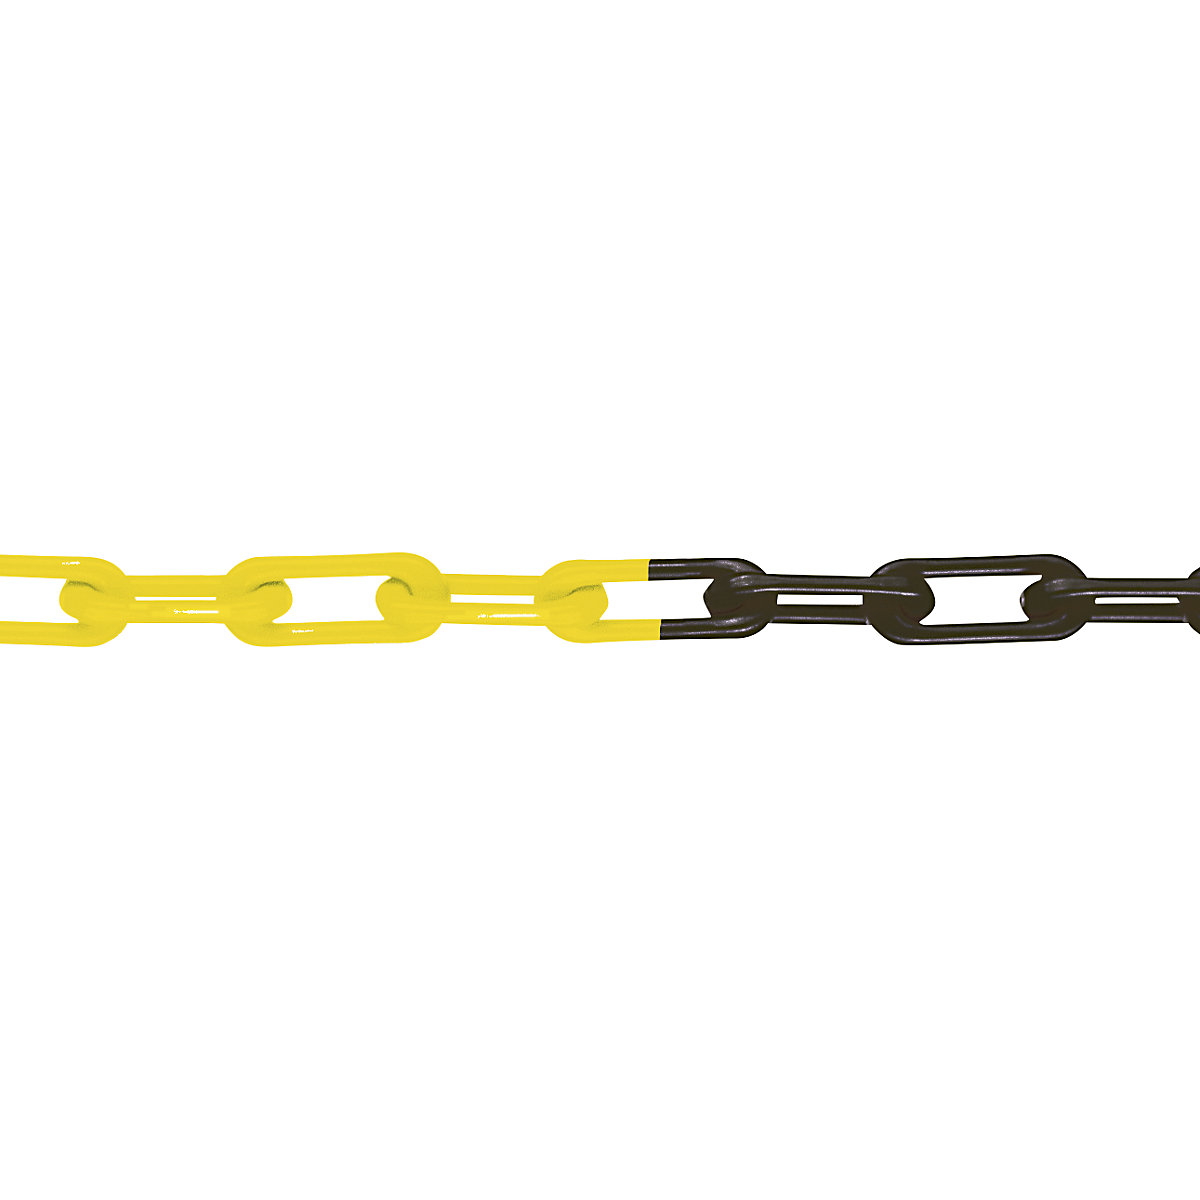 Nylon-kwaliteitsketting, MNK-kwaliteit 6, lengte 50 m, zwart/geel-5